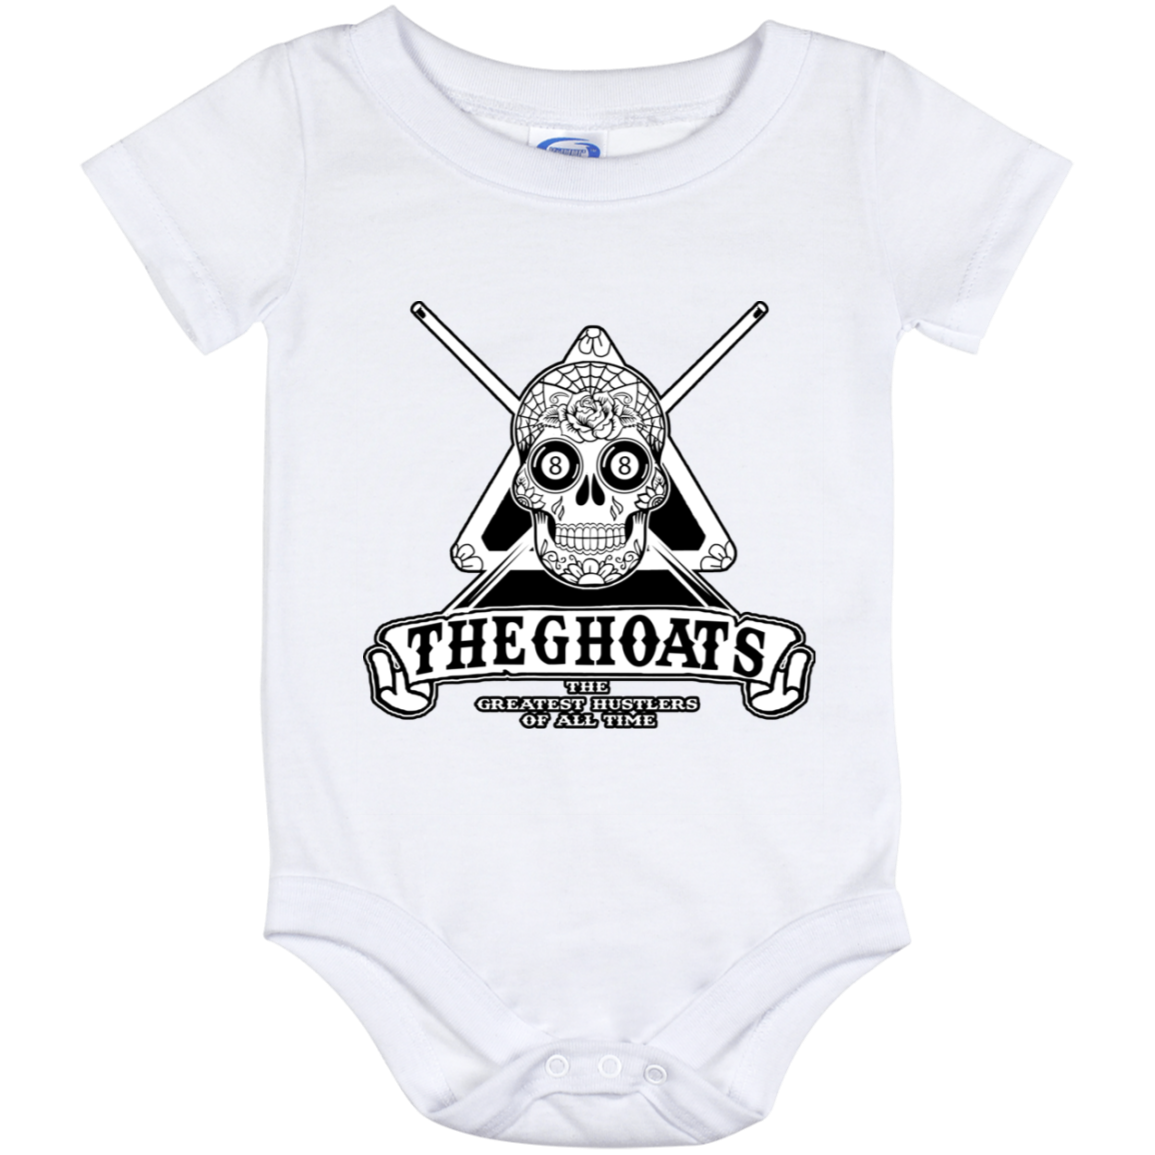 The GHOATS Custom Design #37. Sugar Skull Pool Theme. Baby Onesie 12 Month